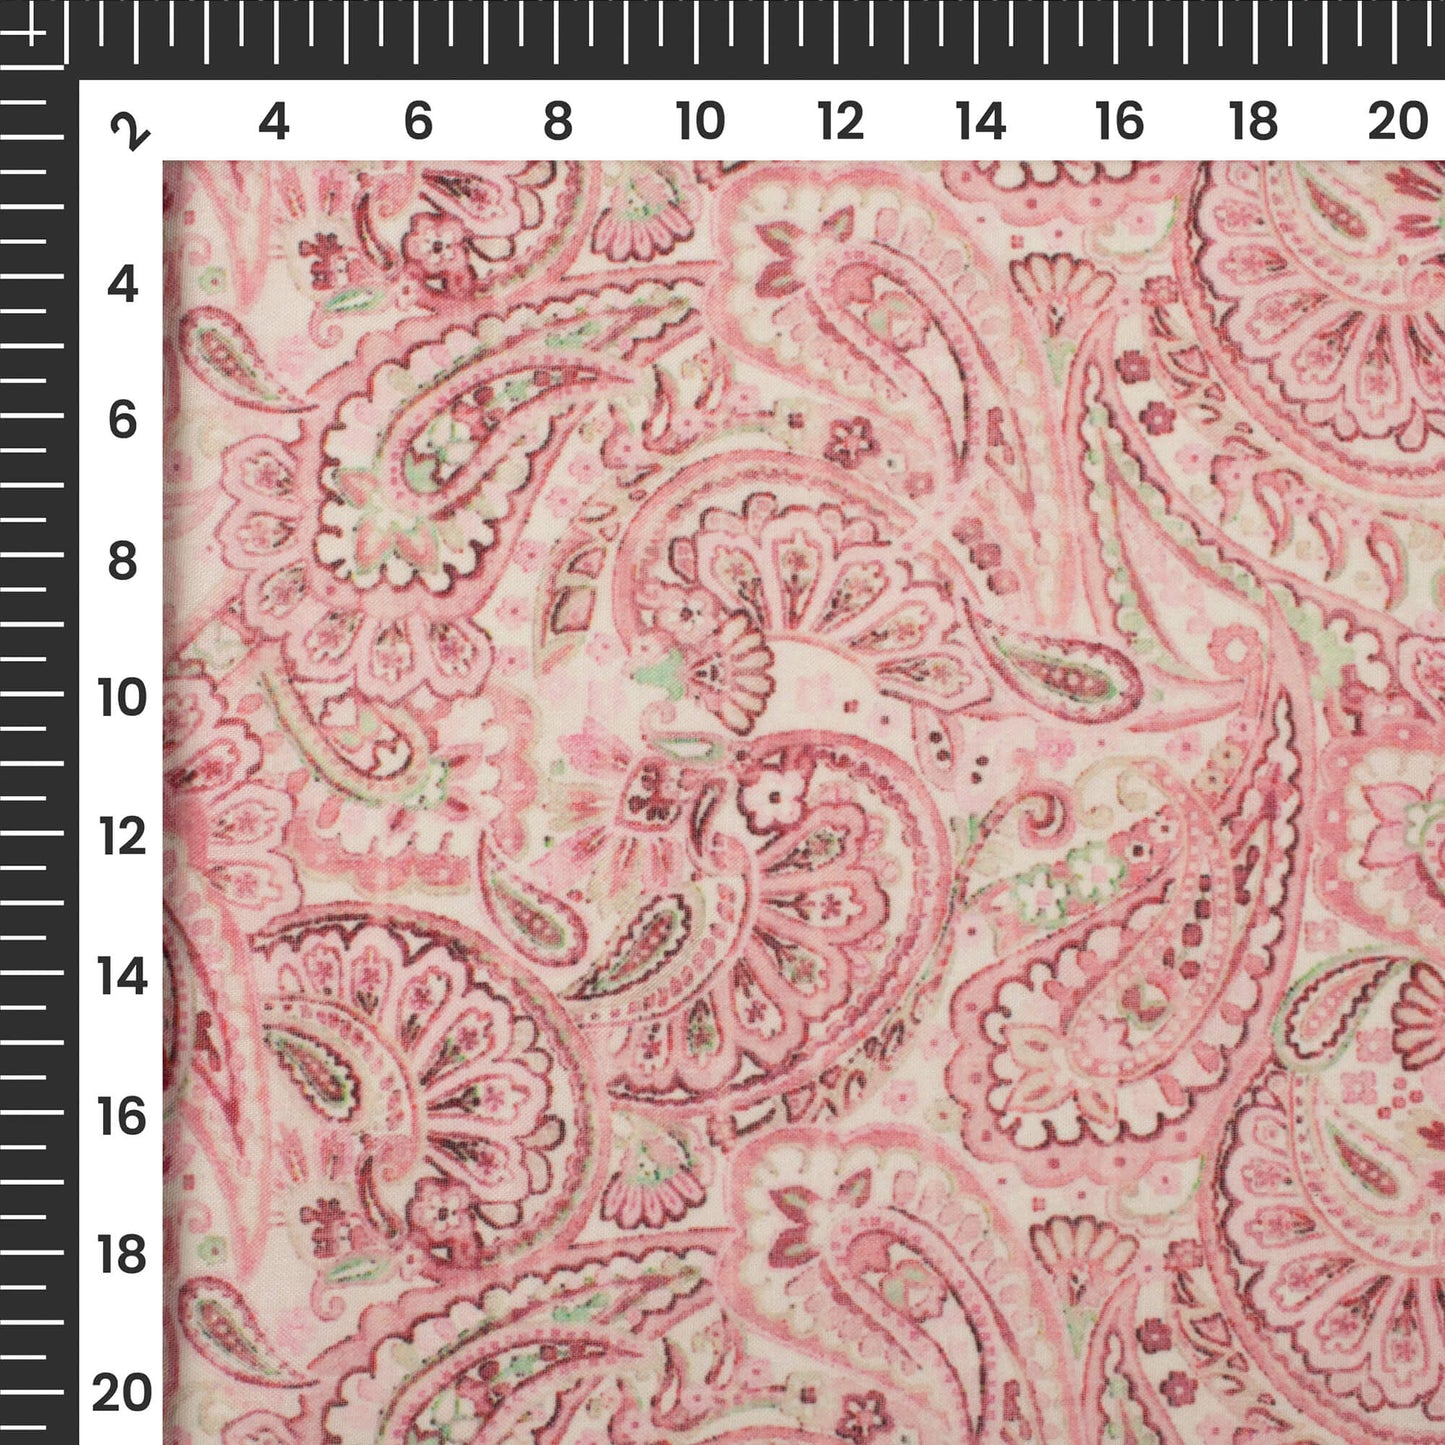 Flamingo Pink Paisley Digital Print Poly Cambric Fabric